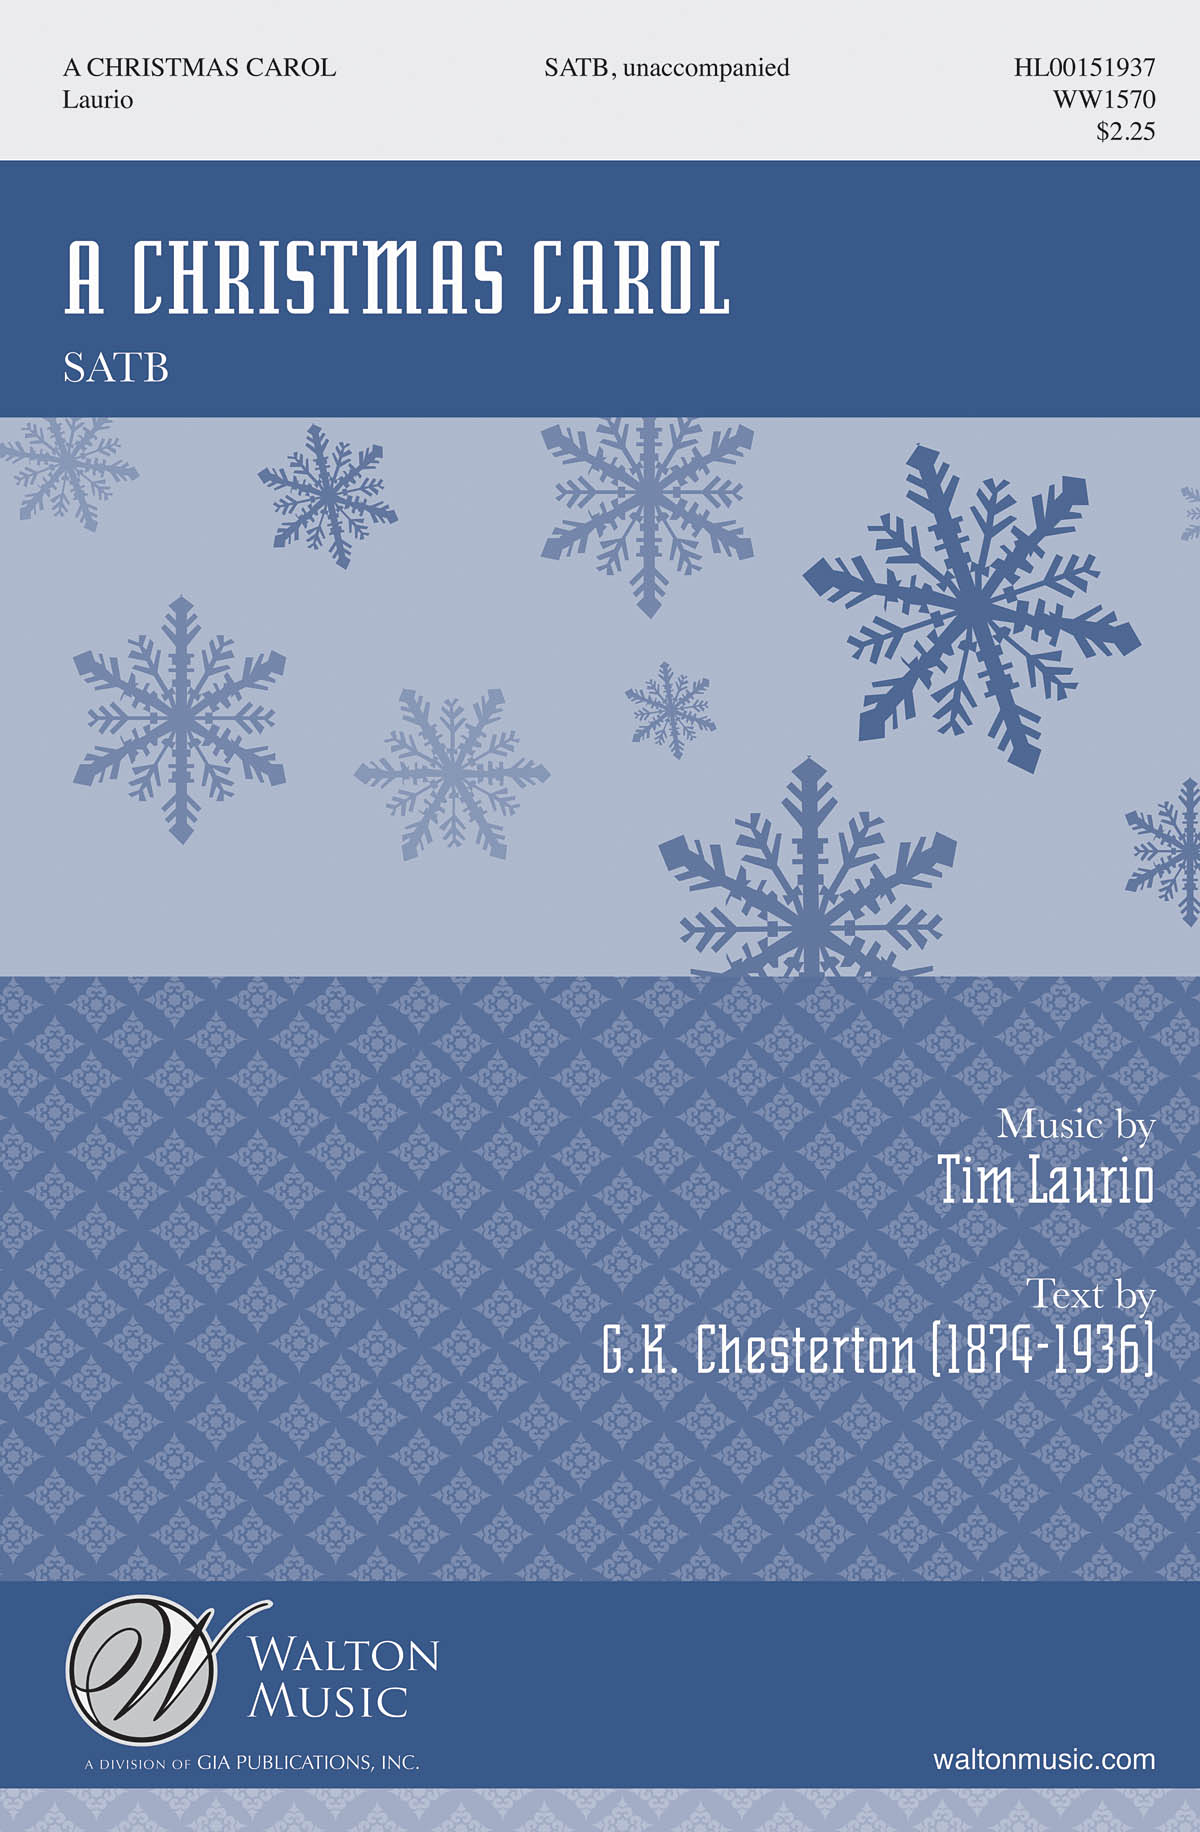 A Christmas Carol - G.K. Chesterton (1874-1936) - pro sbor SATB a Cappella